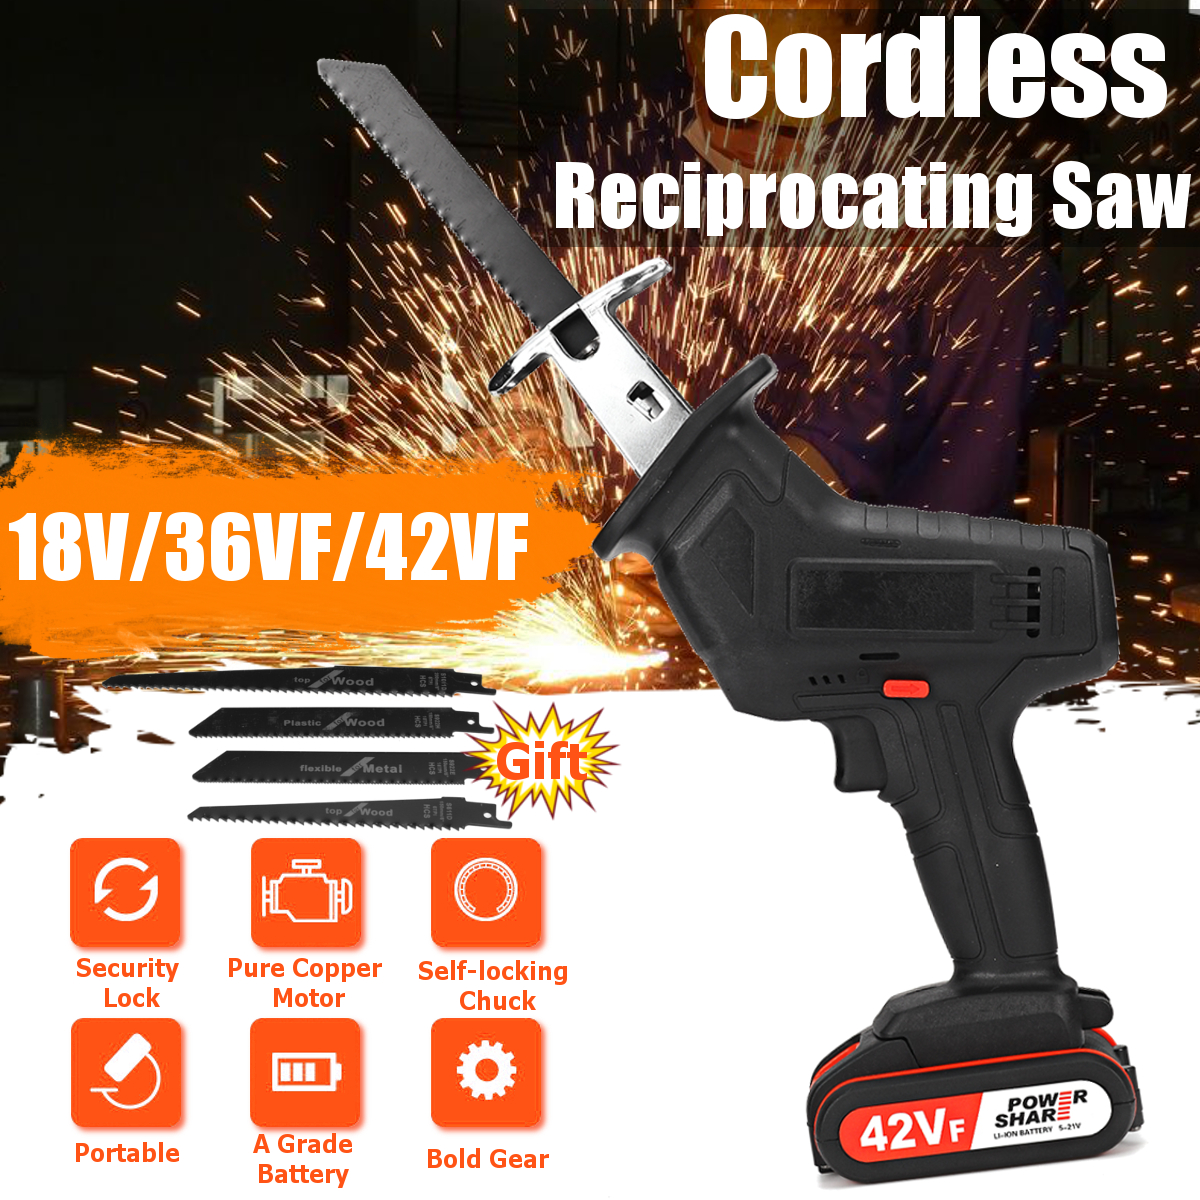 36VF42VF-Cordless-Reciprocating-Saw-Mini-Electric-Saws-Set-W-2pcs-LI-ION-Rechargeable-Battery-1854872-1